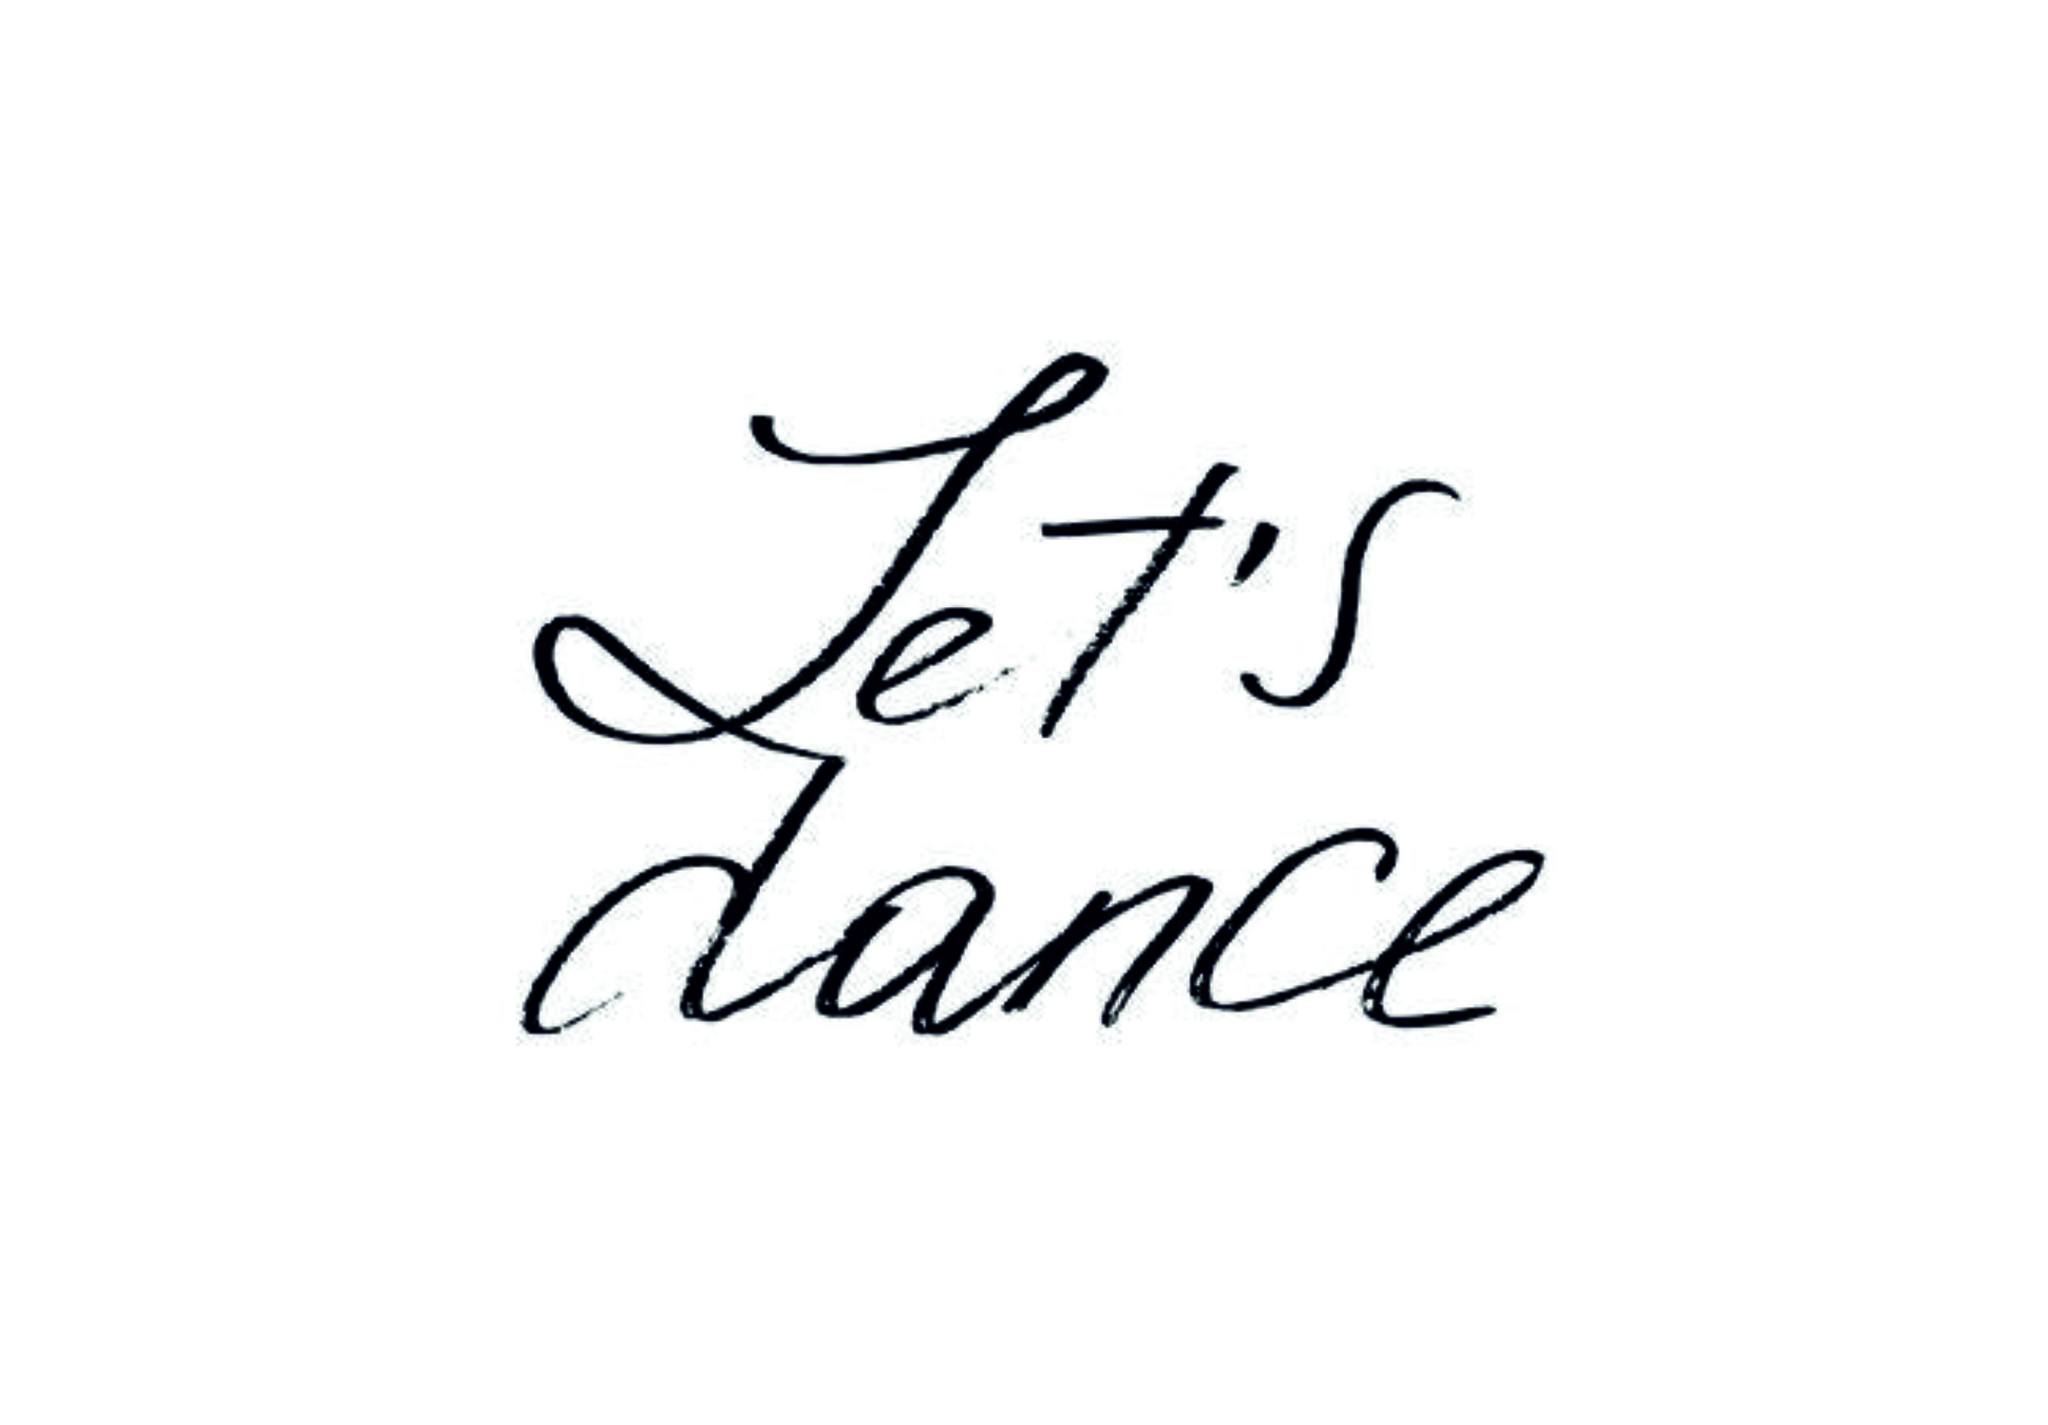 Let’s dance!